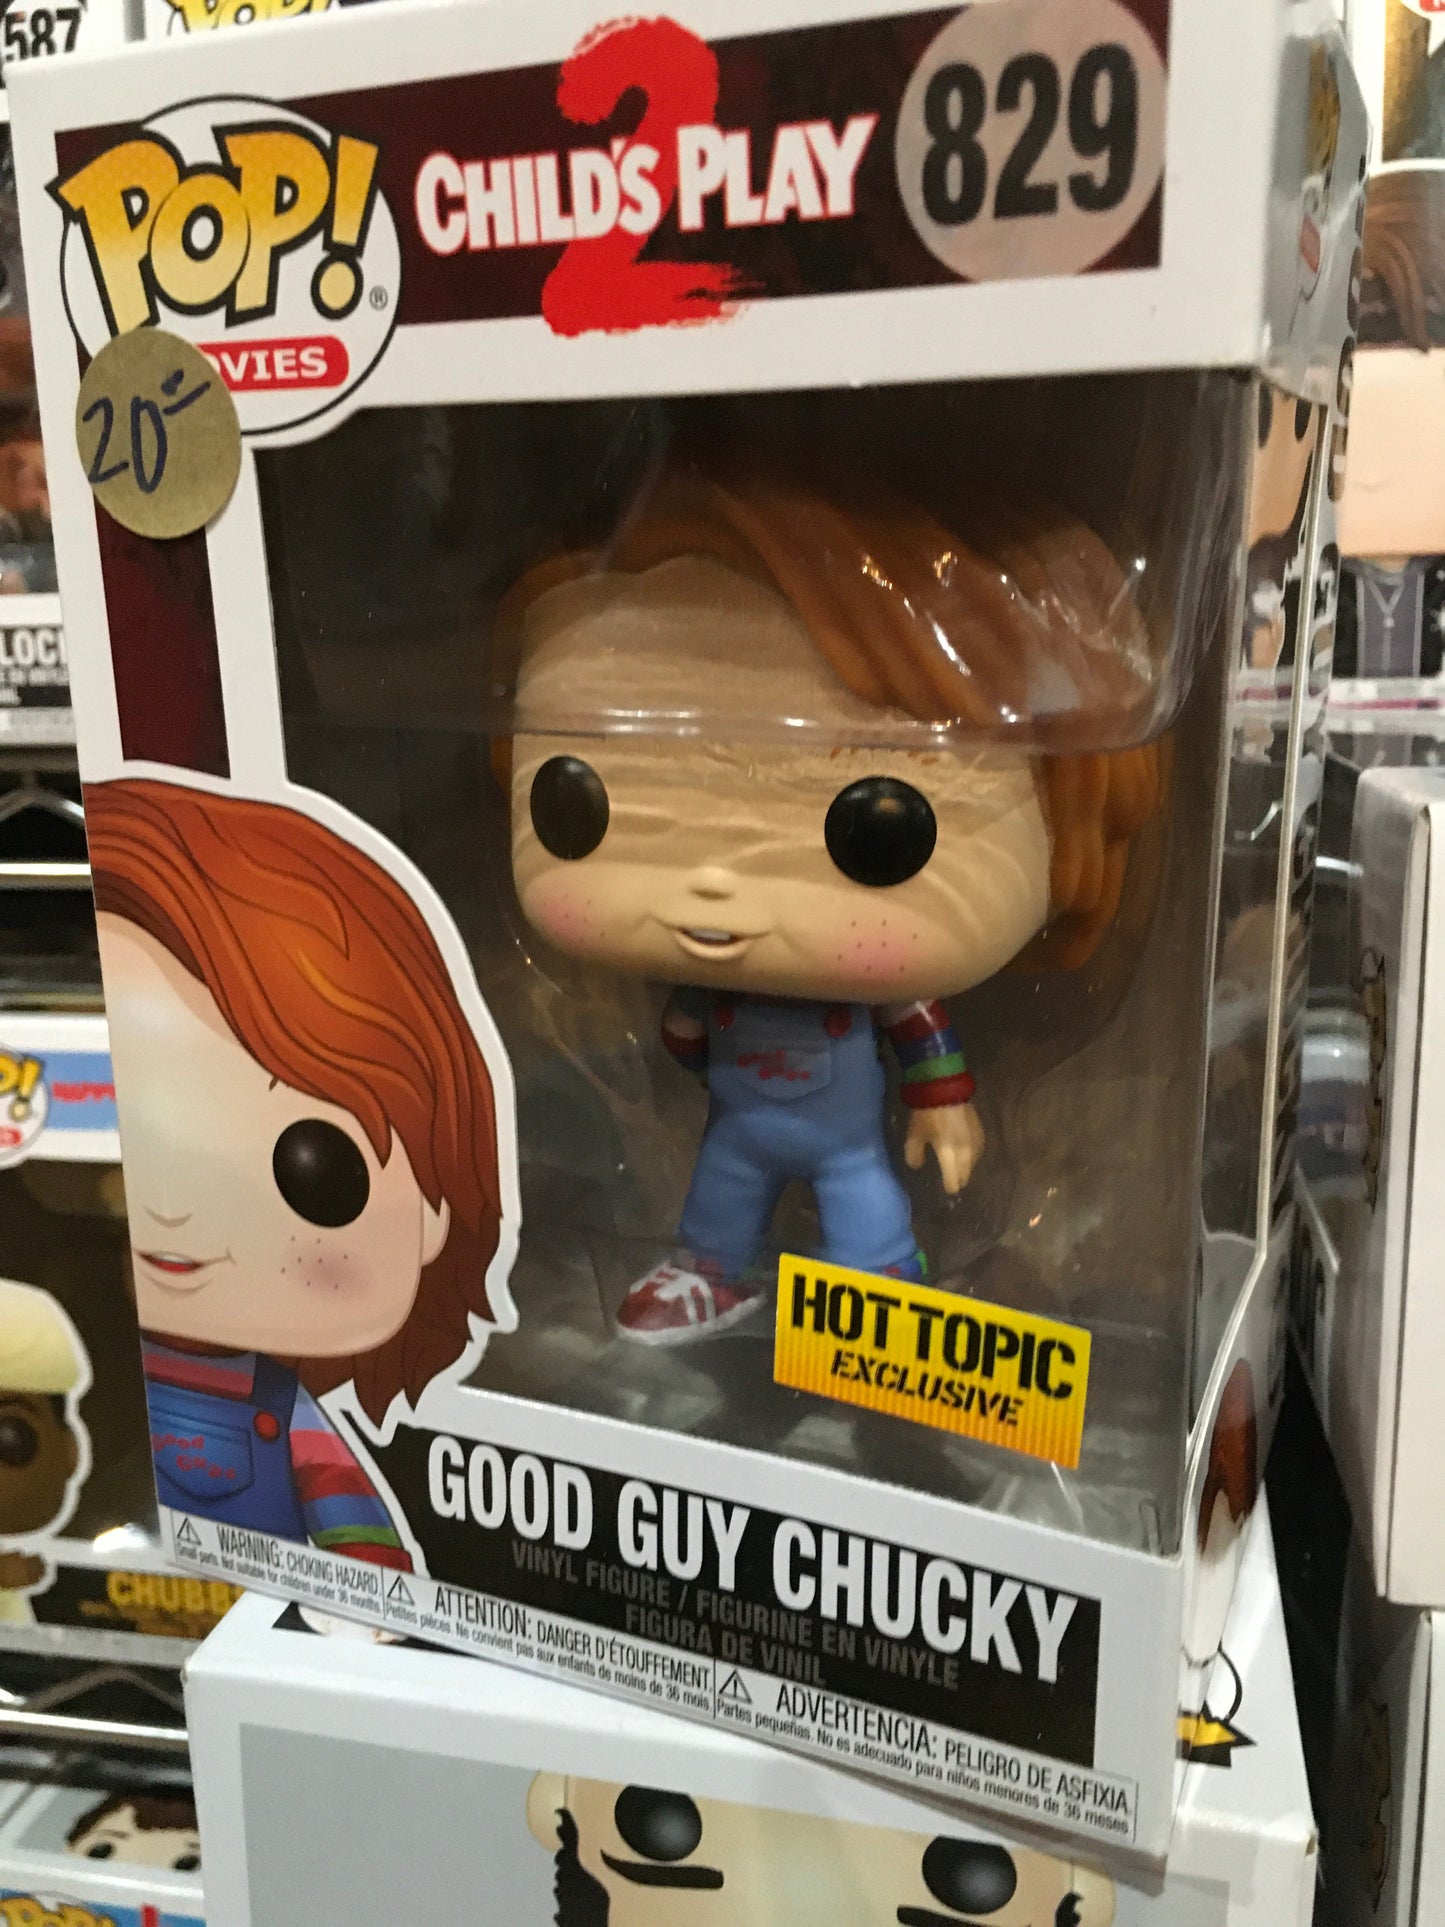 Child's Play - Good Guy Chucky #829 - Exclusive Funko Pop! Vinyl Figure (Movies)